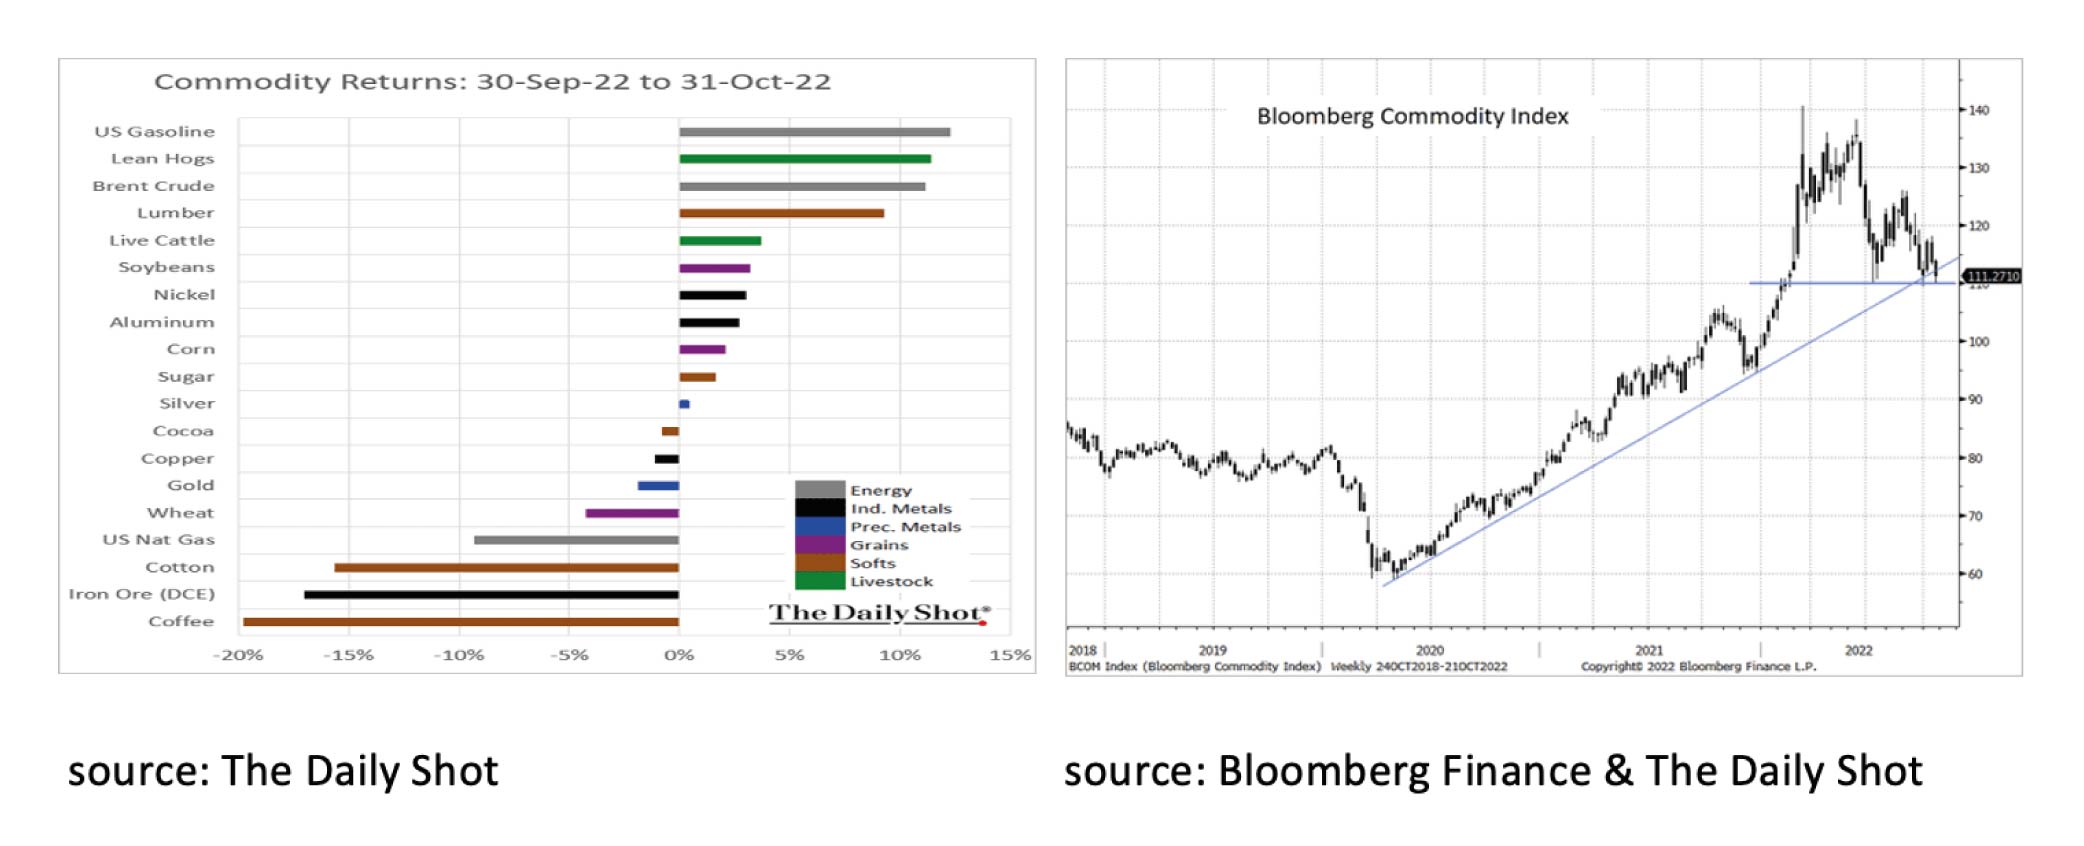 Commodity returns & index